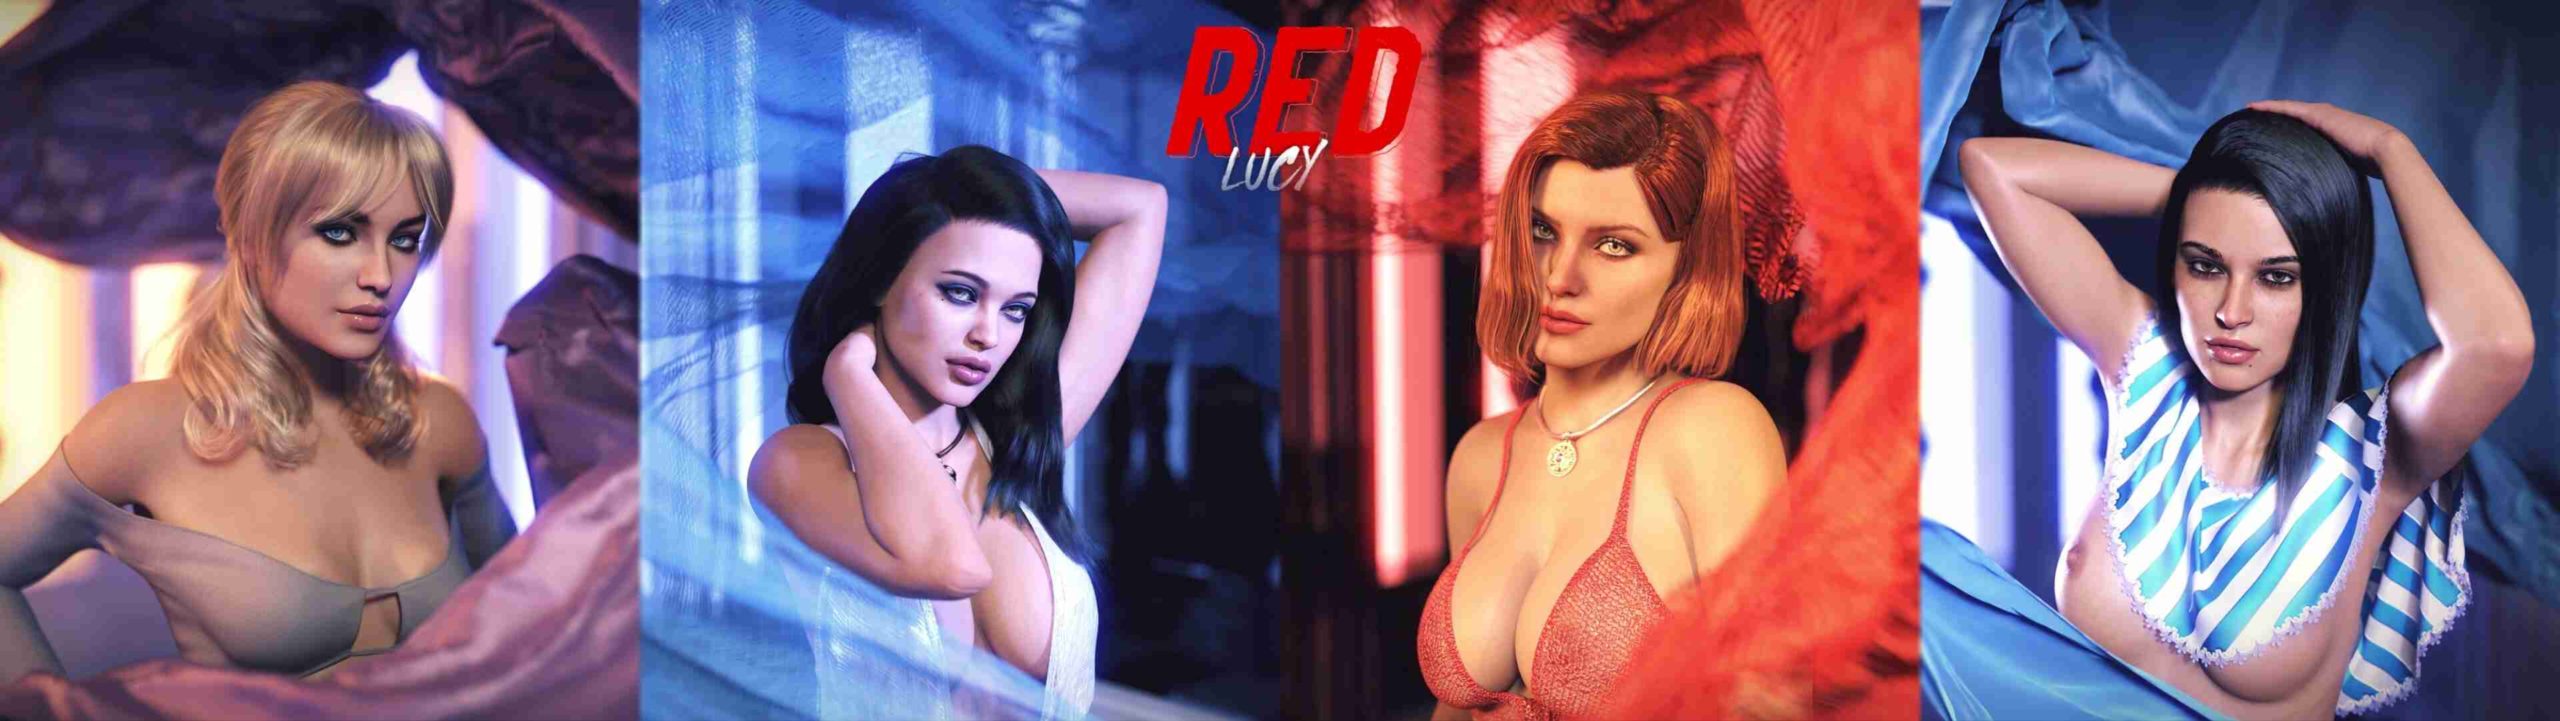 HardCorn, Creating Renpy Erotic & Adult Games